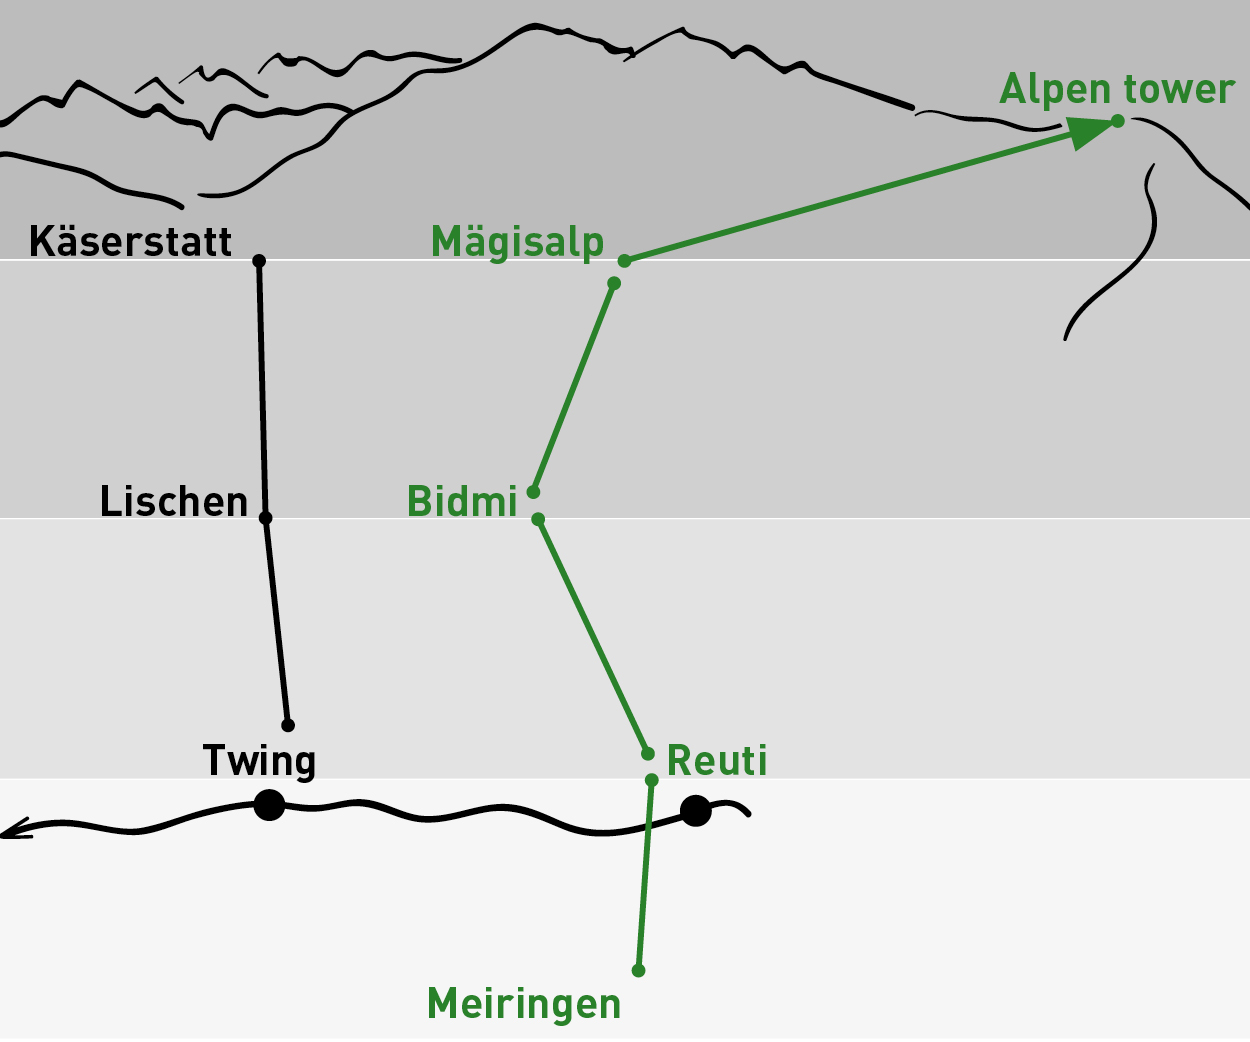 Meiringen – Alpen tower | Aller simple